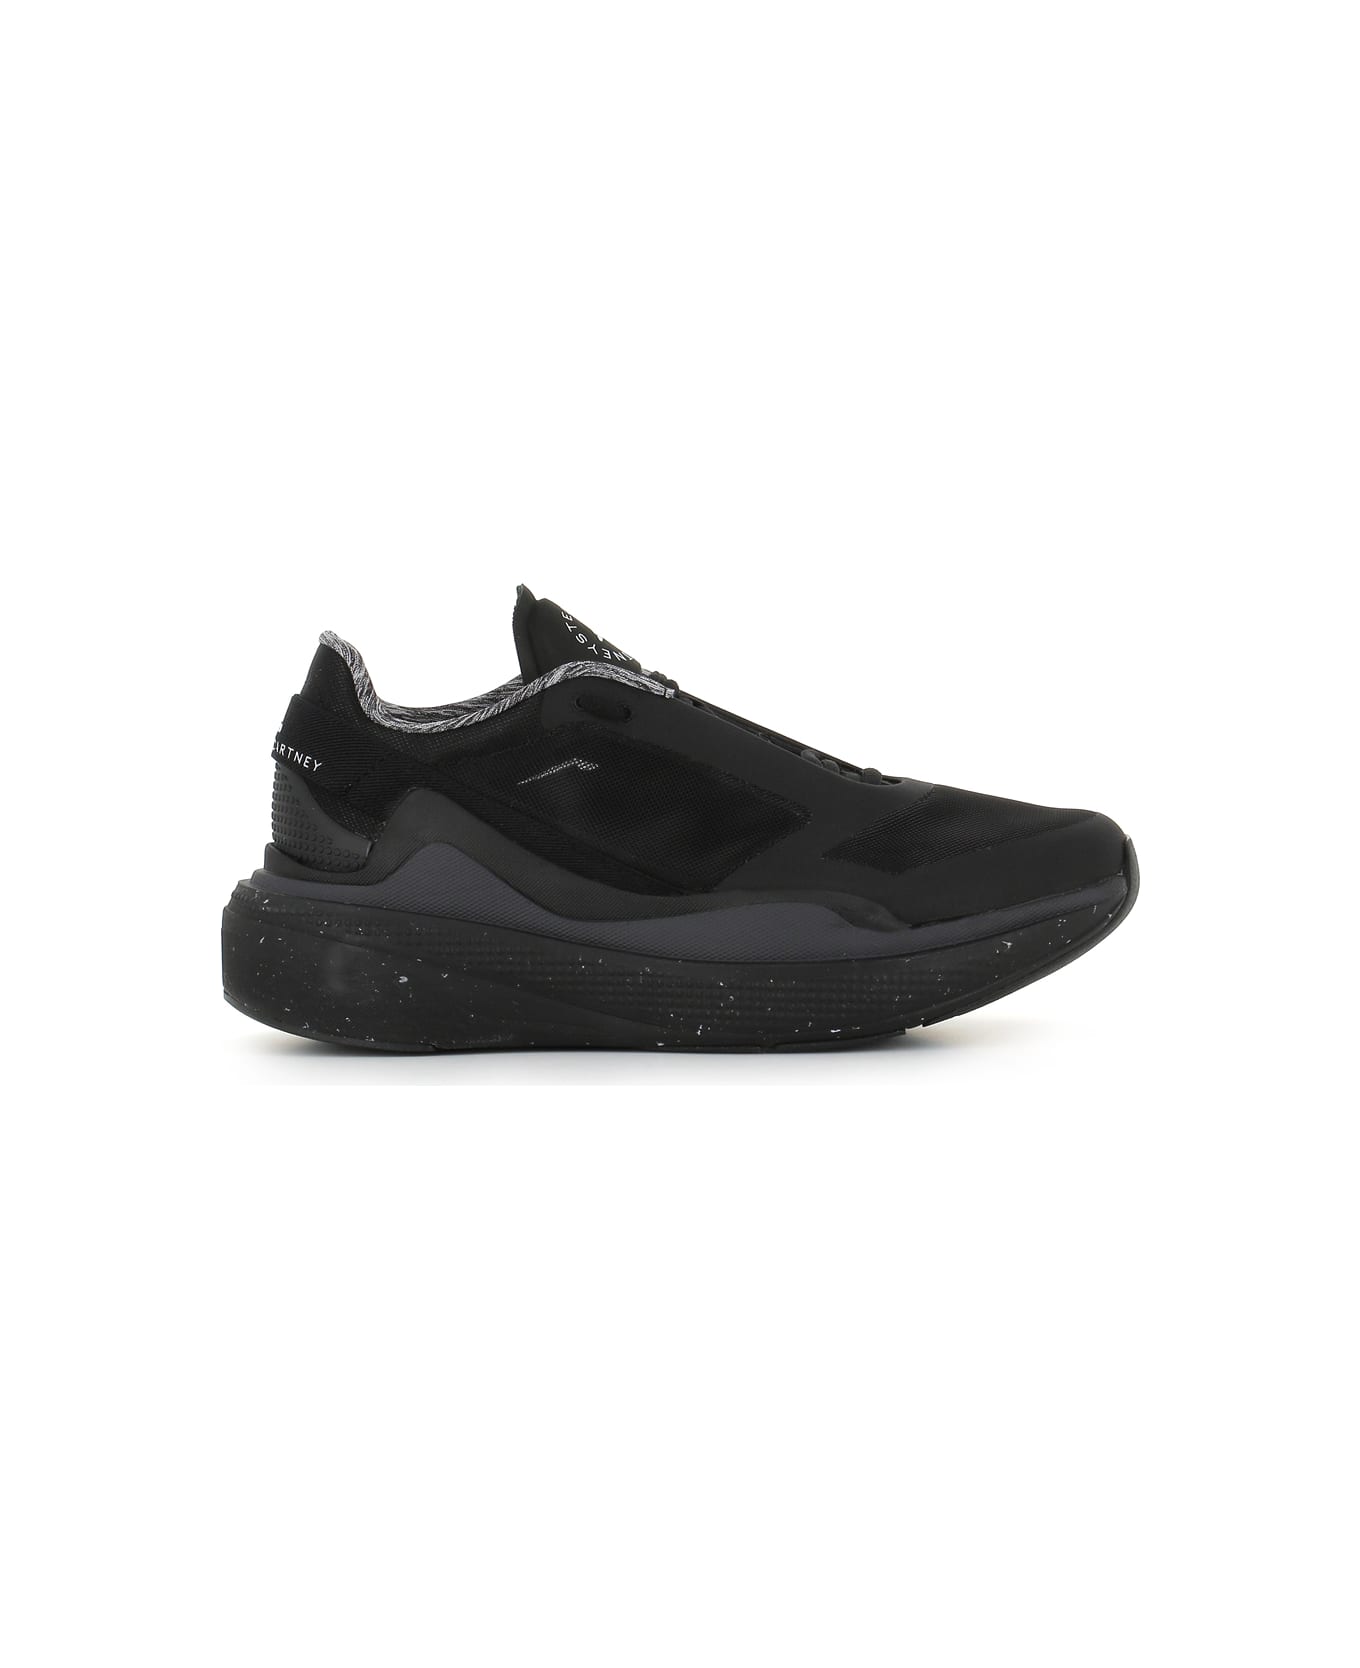 Adidas by Stella McCartney Sneaker Asmc Earthlight C - Black/Grey